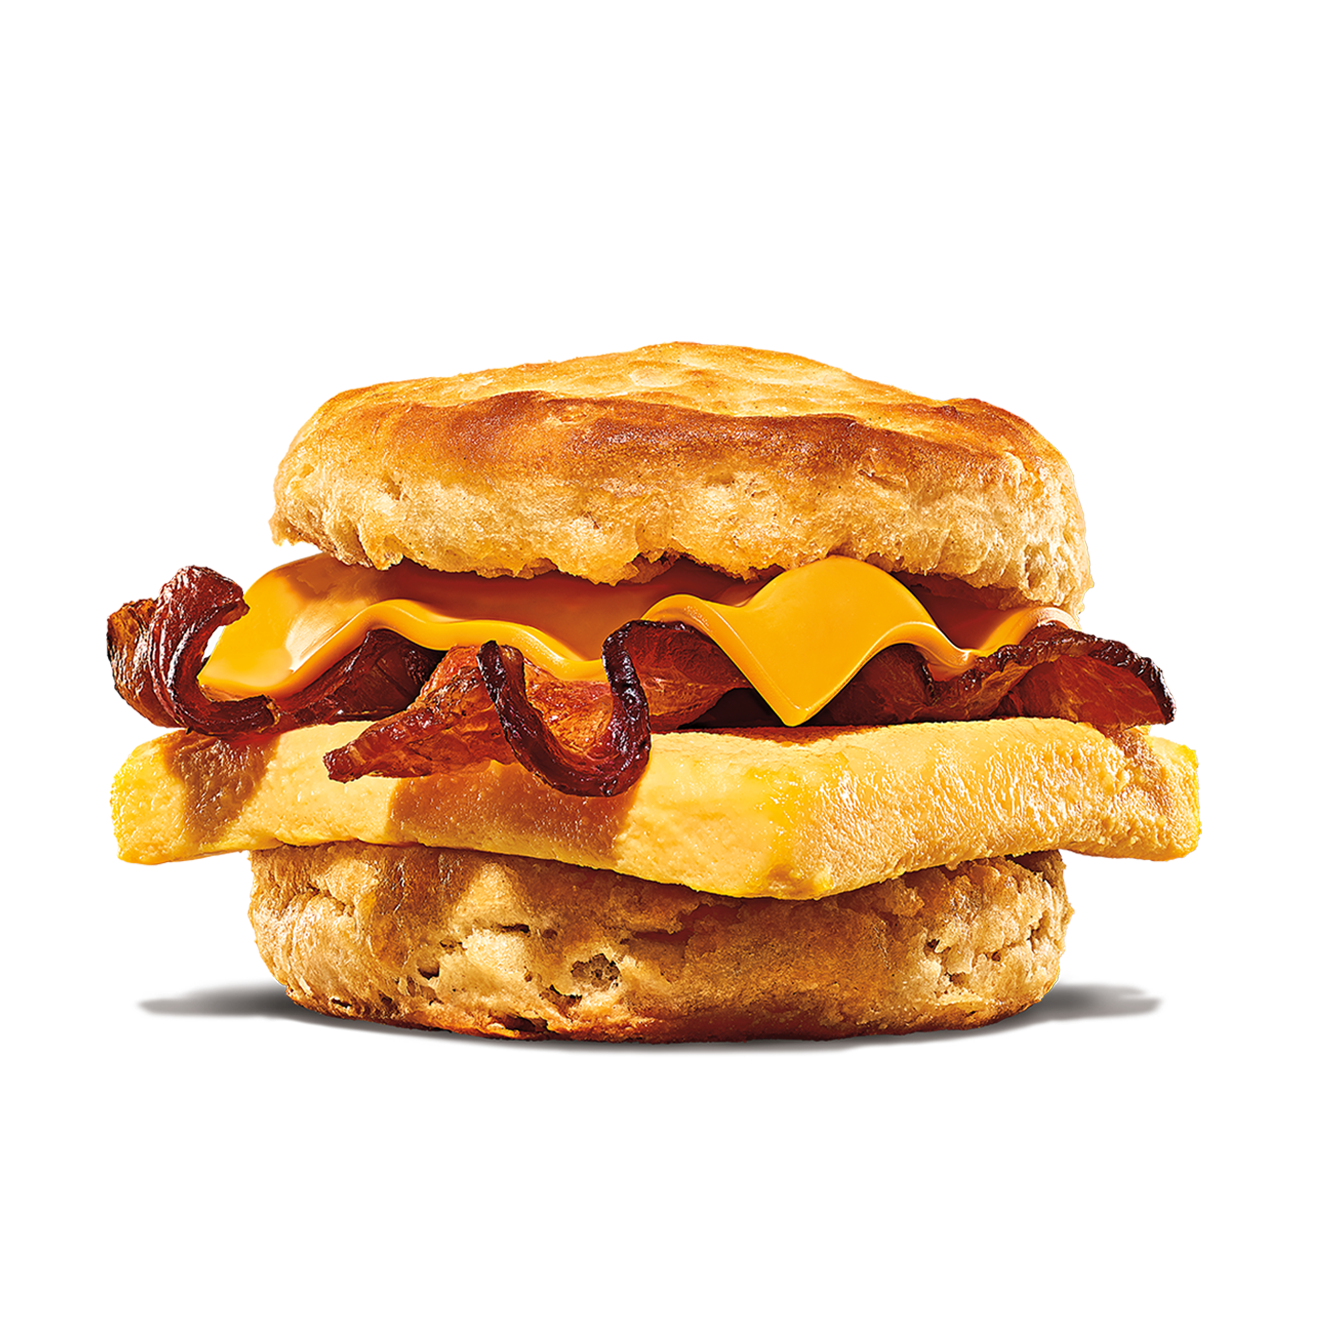 Burger King Hartford (860)296-6240